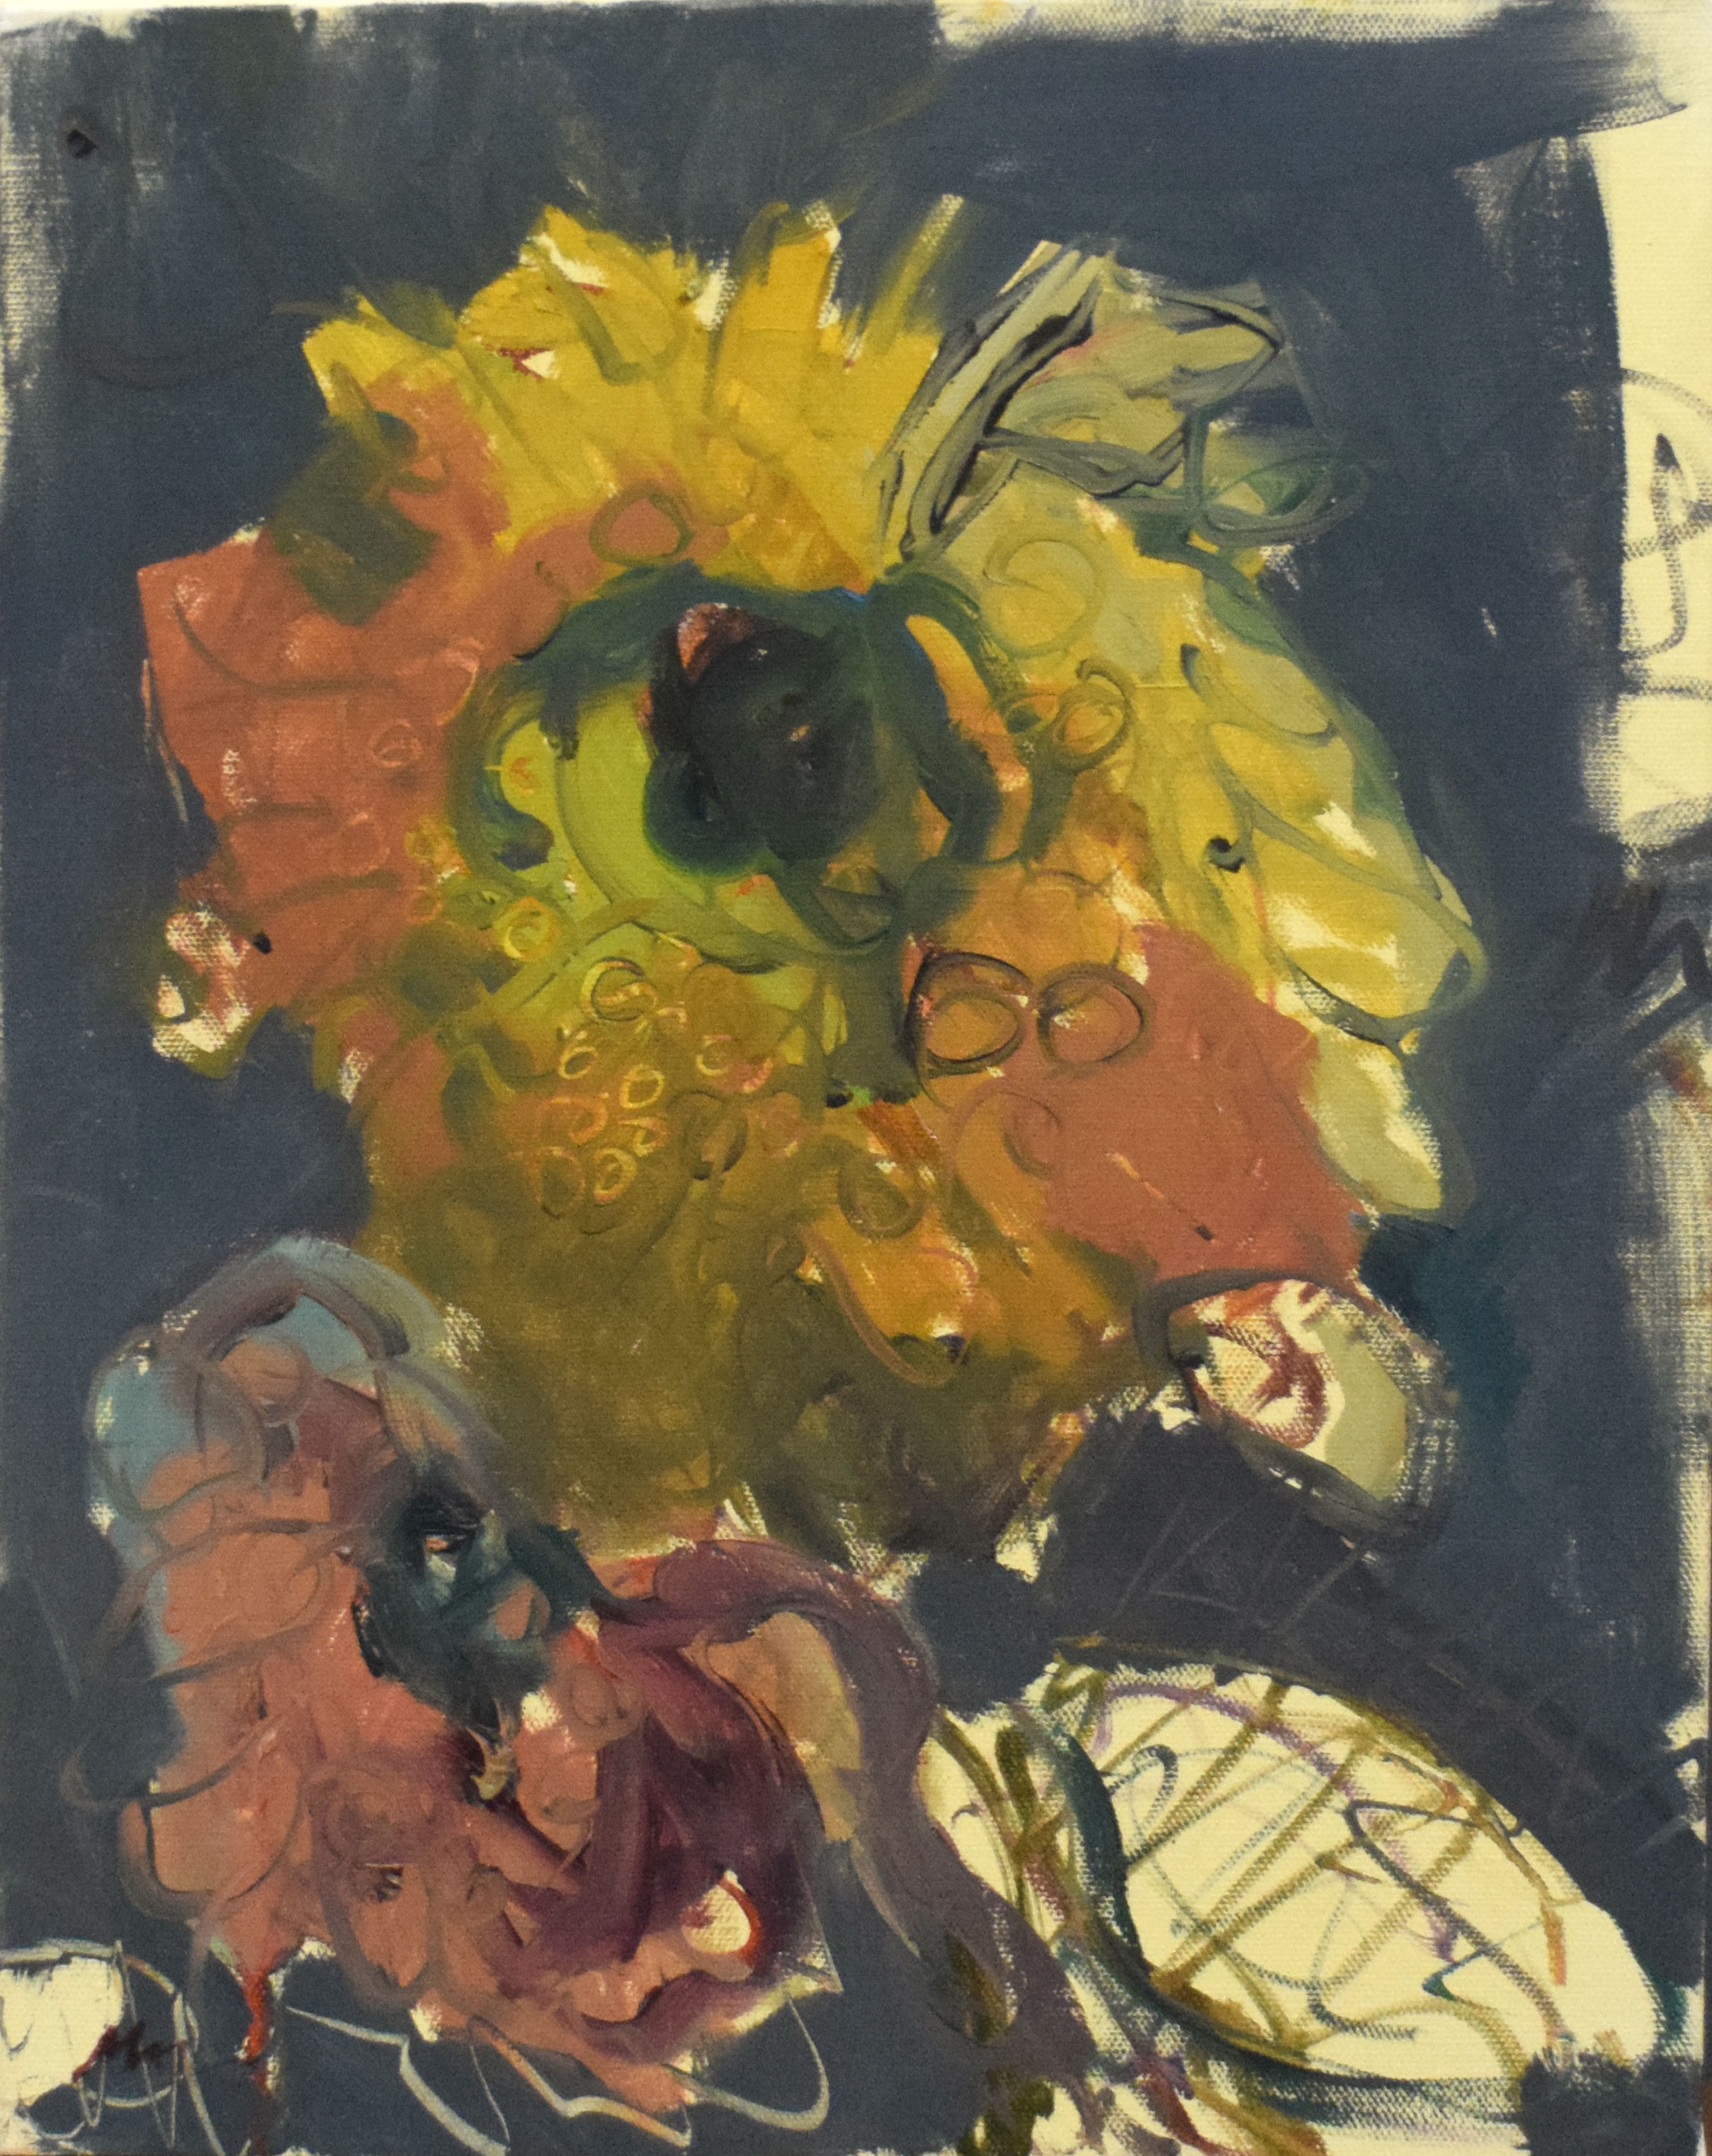 Martin Kinnear (contemporary), "Study xxvi", oil on canvas, signed lower left, 41 x 31cm,